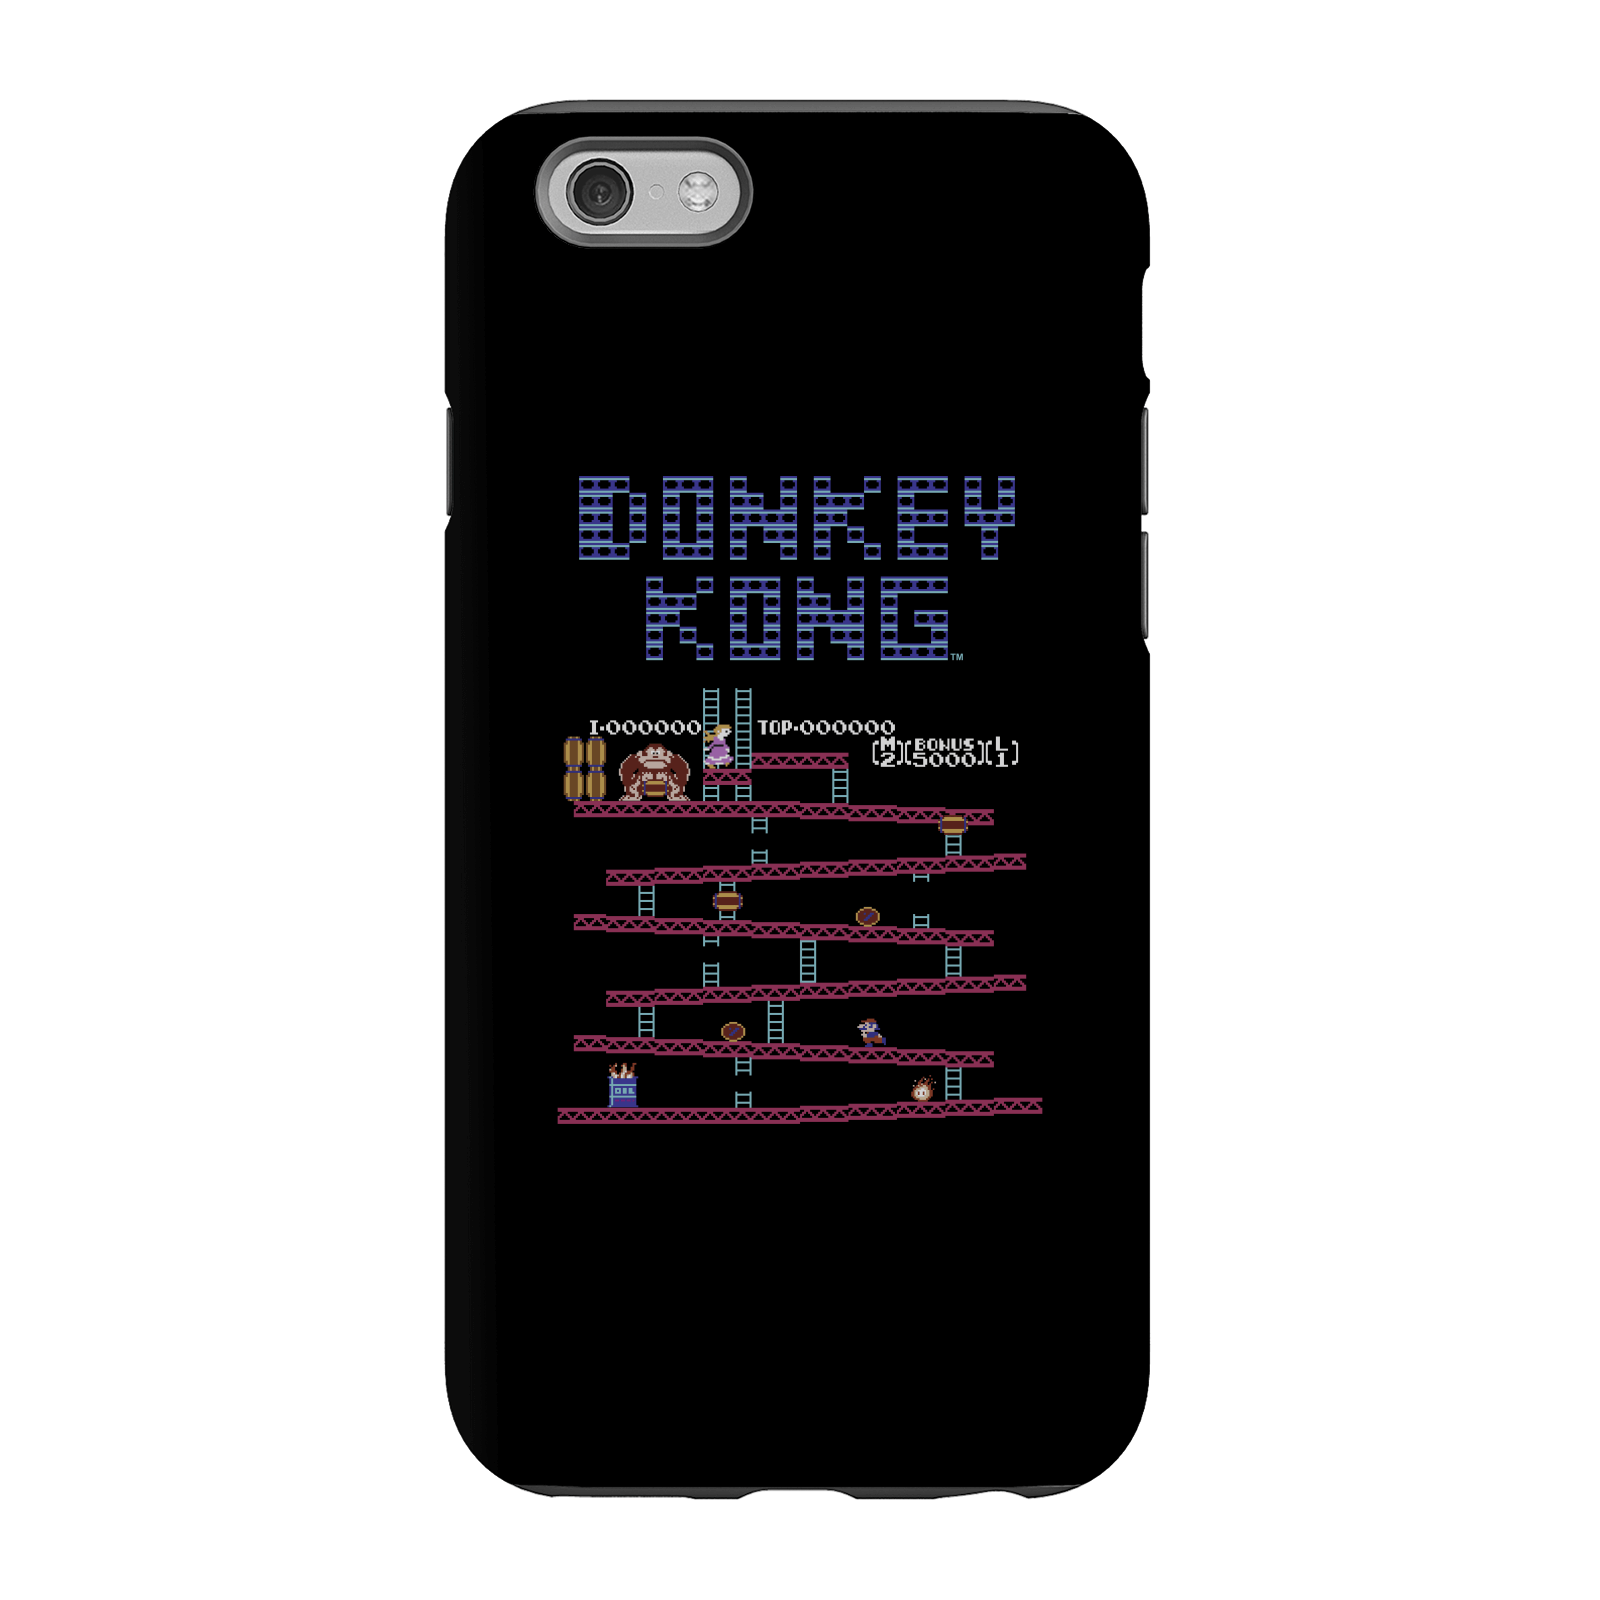 Nintendo Donkey Kong Retro Phone Case - iPhone 6 - Tough Case - Gloss